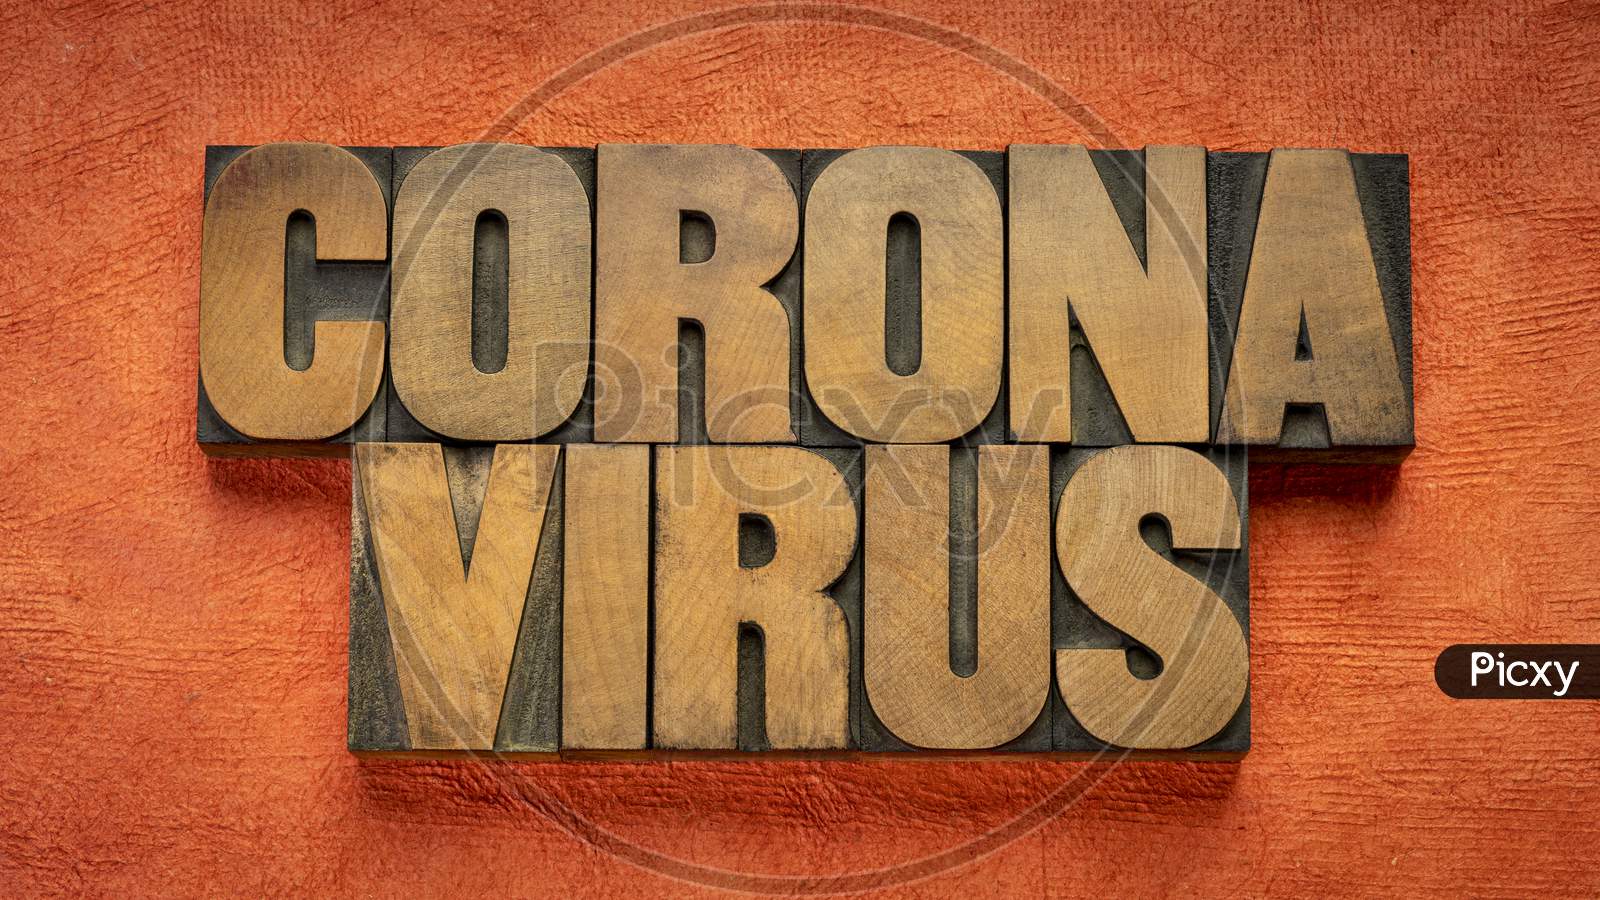 Coronavirus Word Abstract In Vintage Letterpress Wood Type Against Handmade Bark Paper, Covid-19 Virus Outbreak And Pandemic Concept